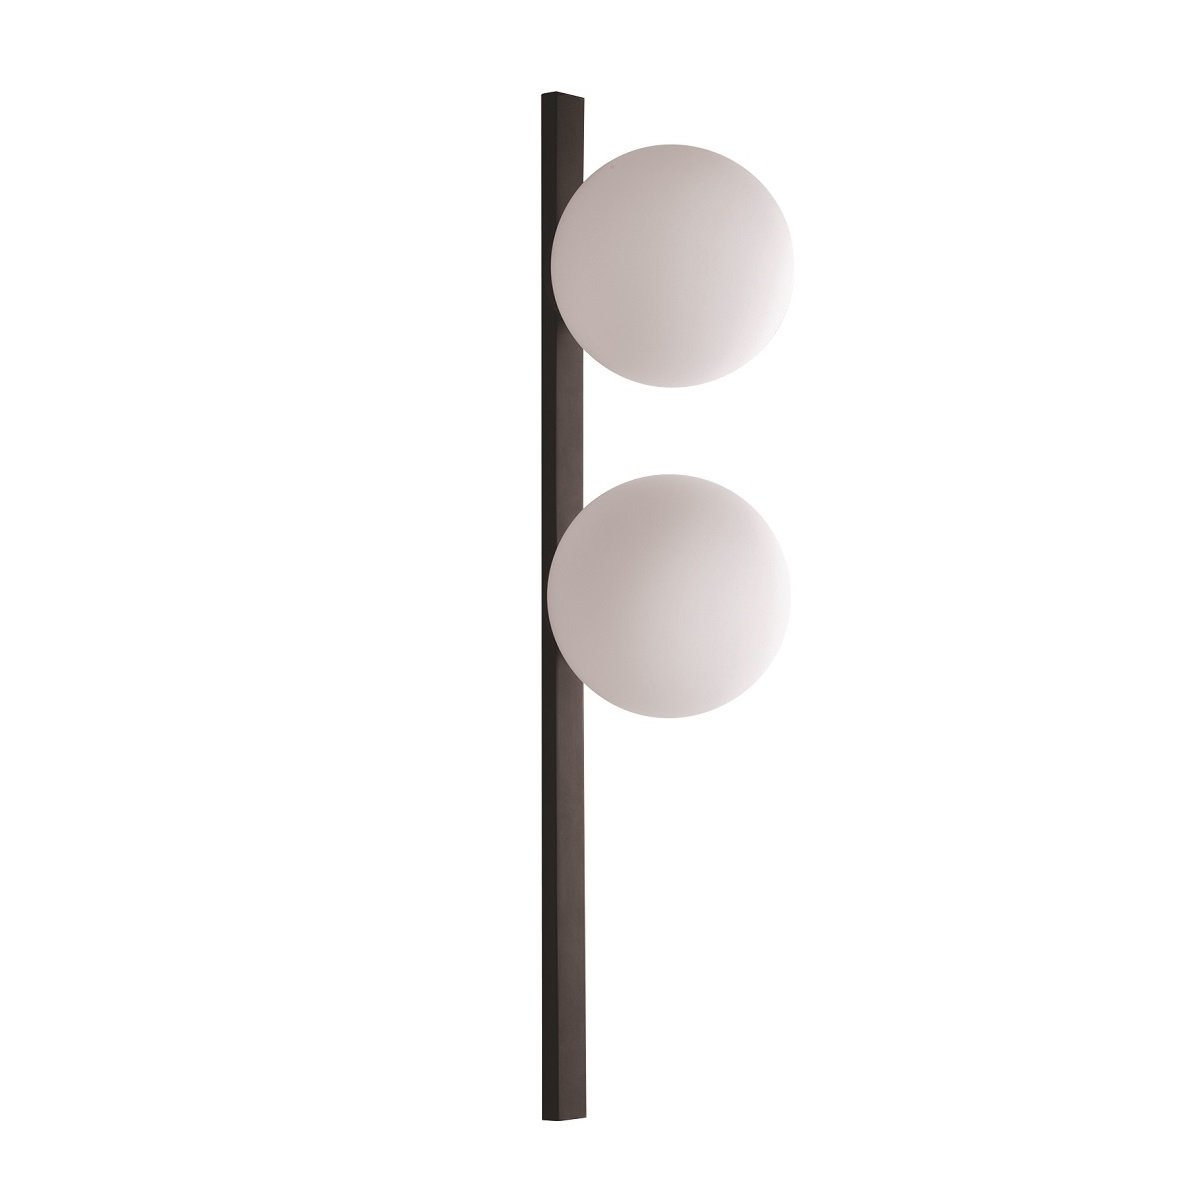 Luce Design Pluto Lampen ECO kaufen Leuchten Light im Shop Nero Wandleuchte 2-flammig online & AP2 9110 